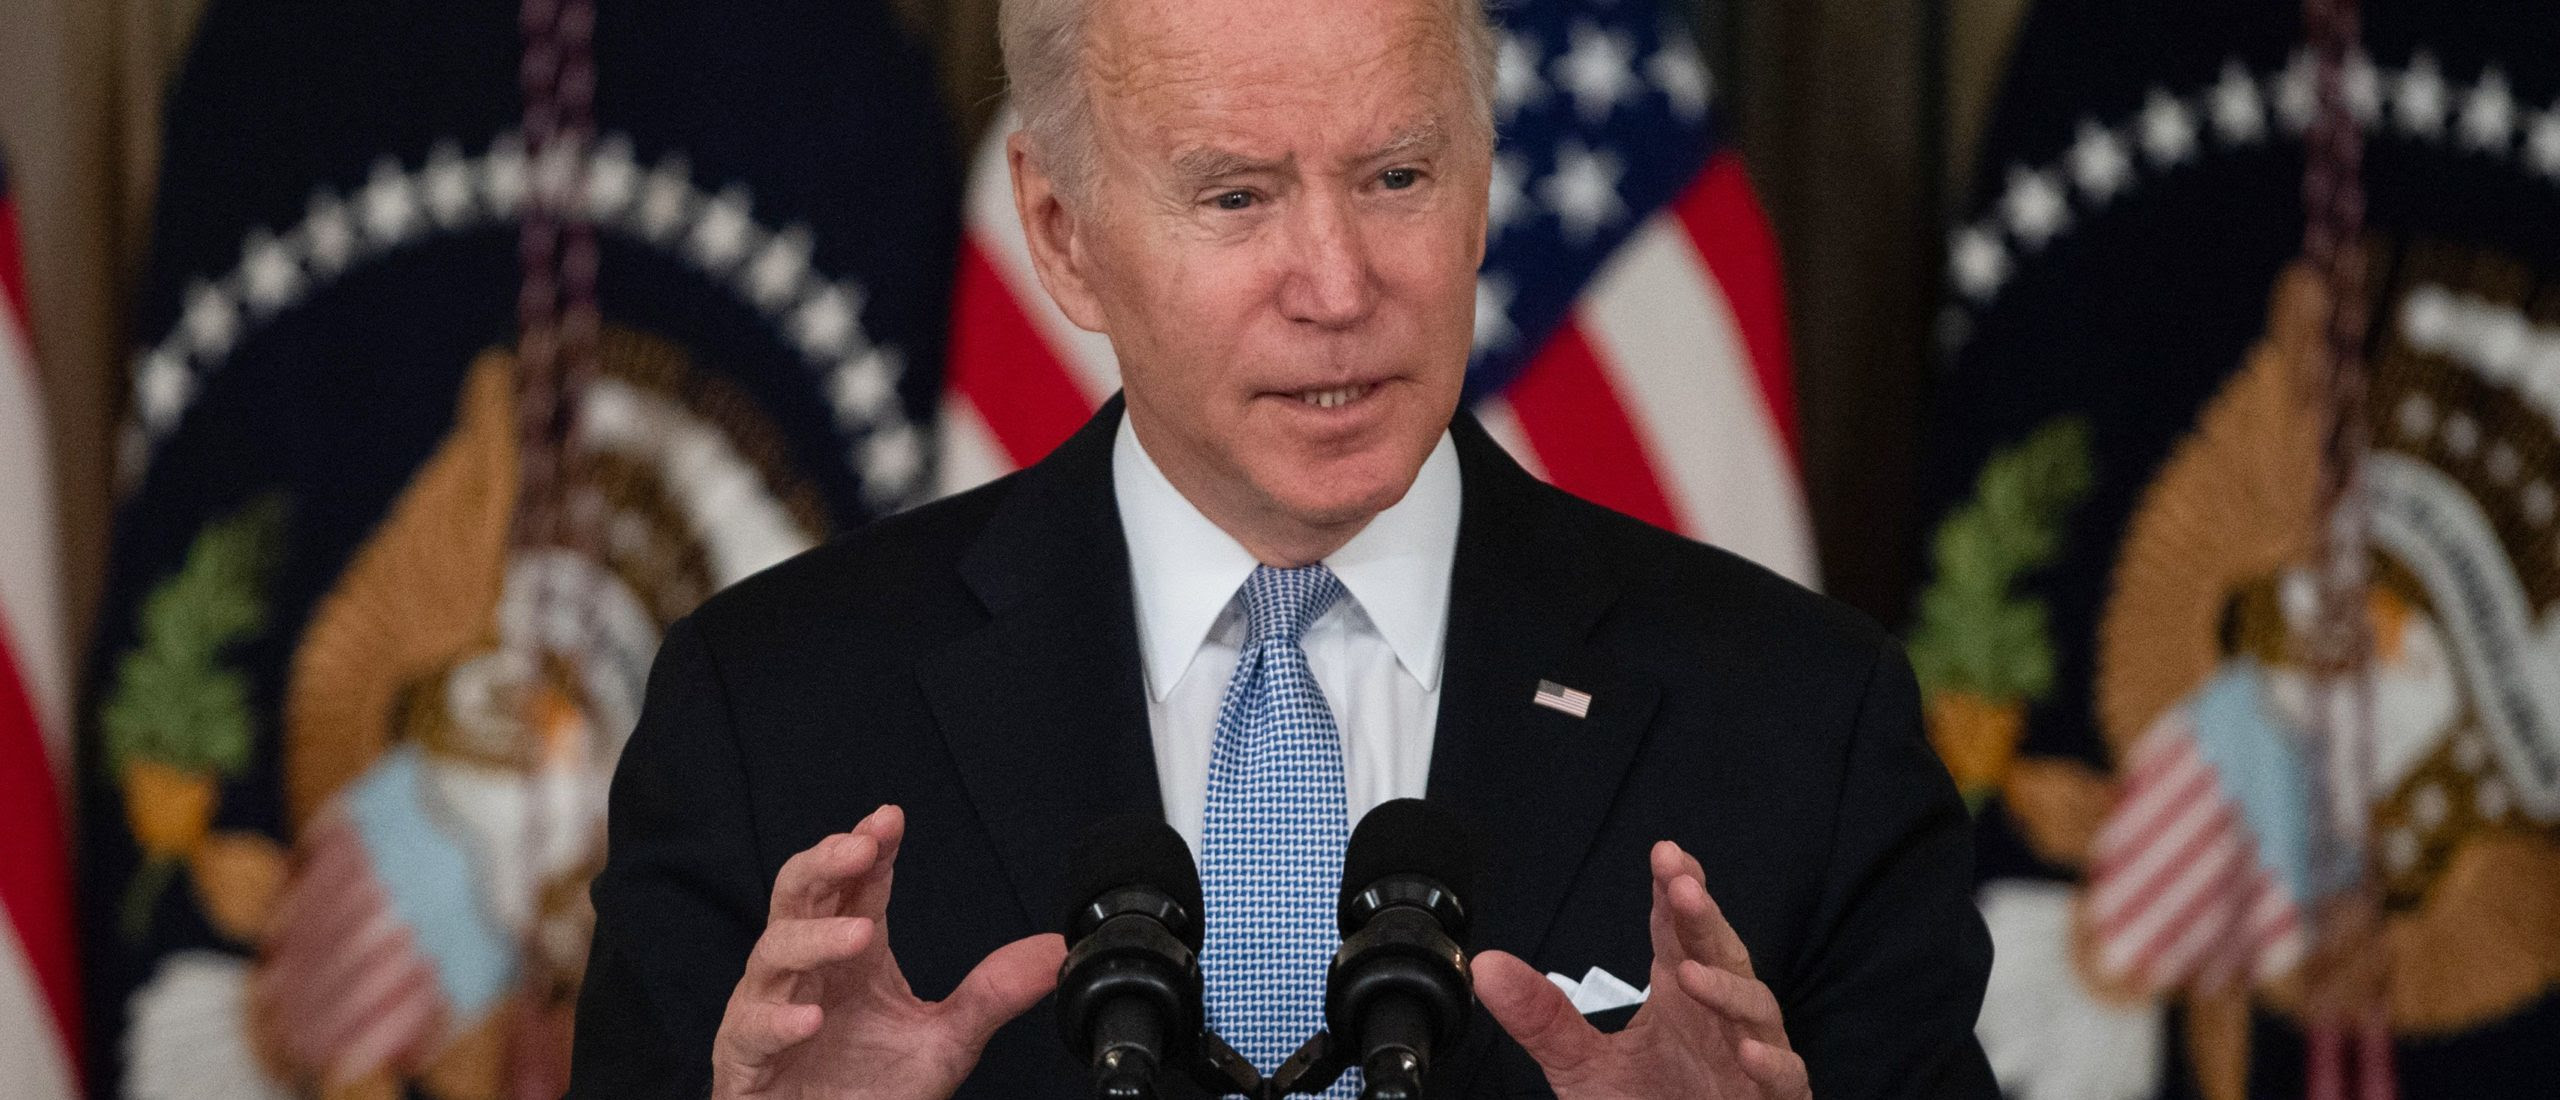 Biden Admin Officials Block Top Aides Who Want Stricter Immigration Enforcement: REPORT